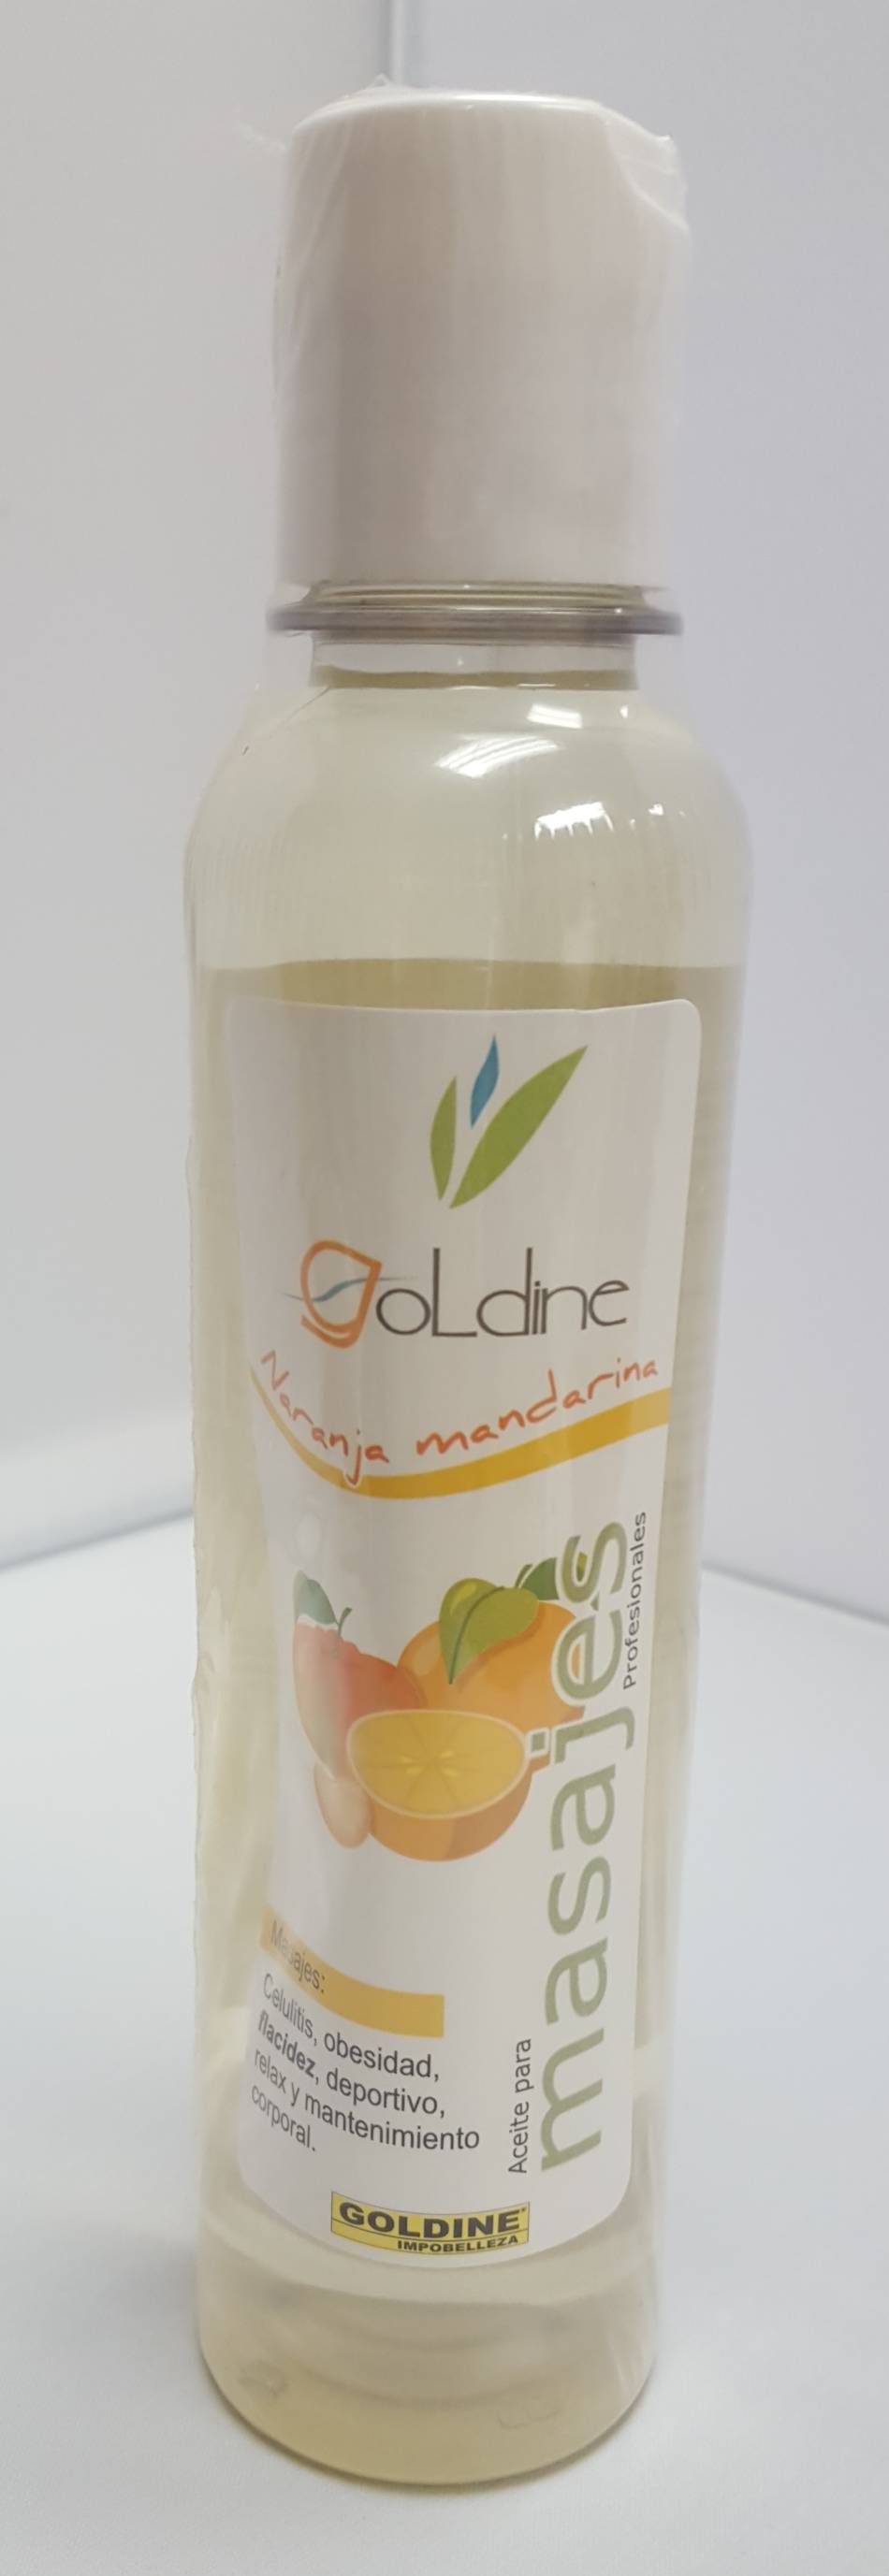 Aceite de Mandarina Goldine (240gr) #856